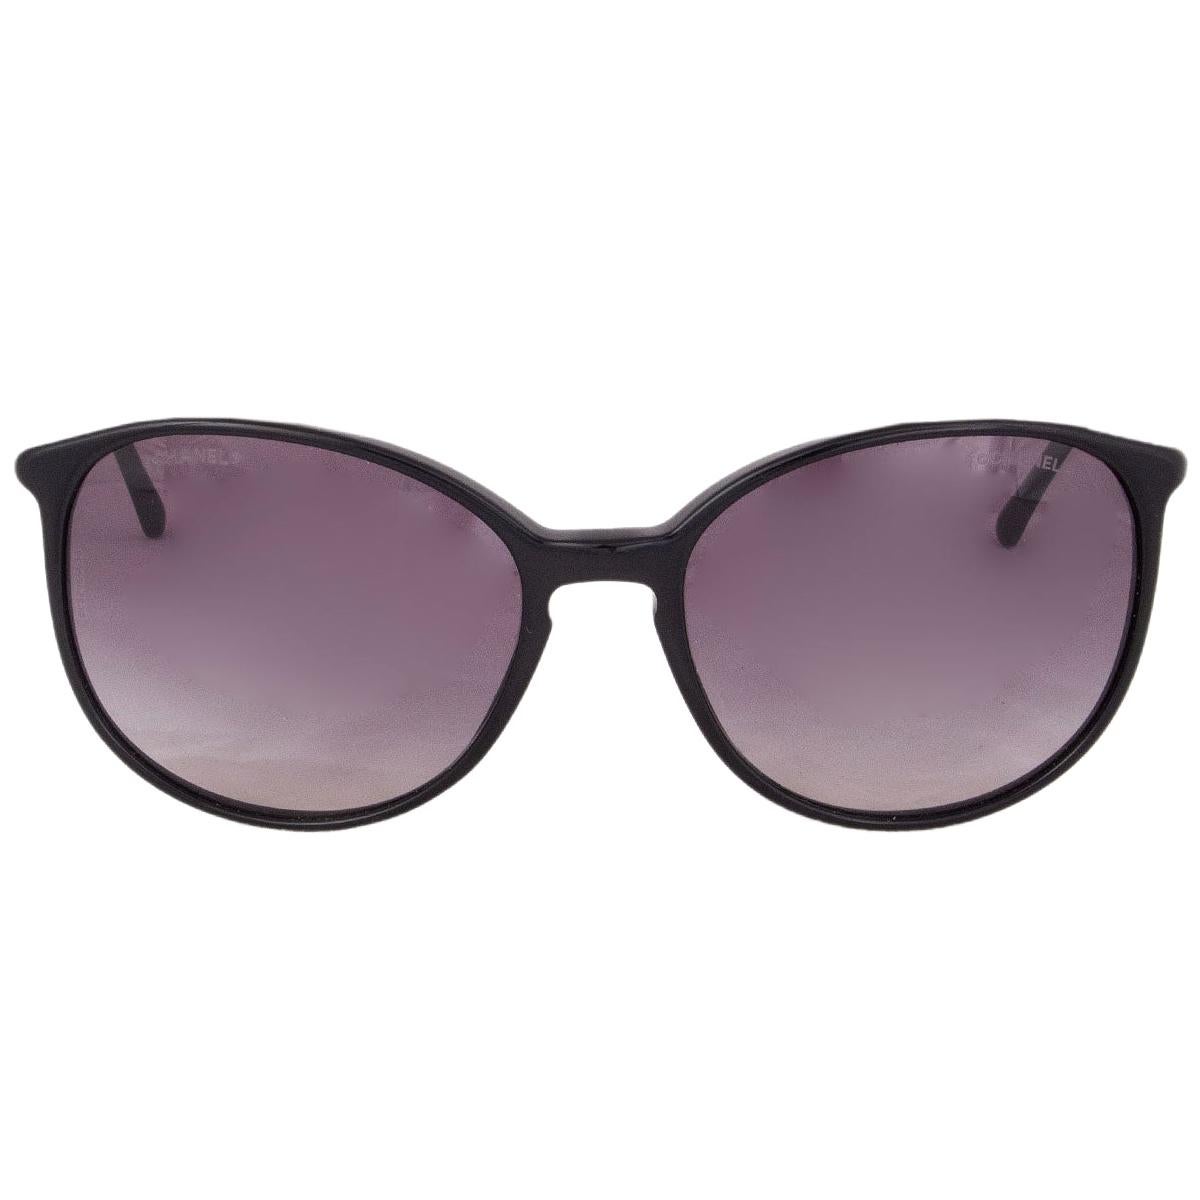 Chanel woman’s sunglasses 5228 black frame grey lenses